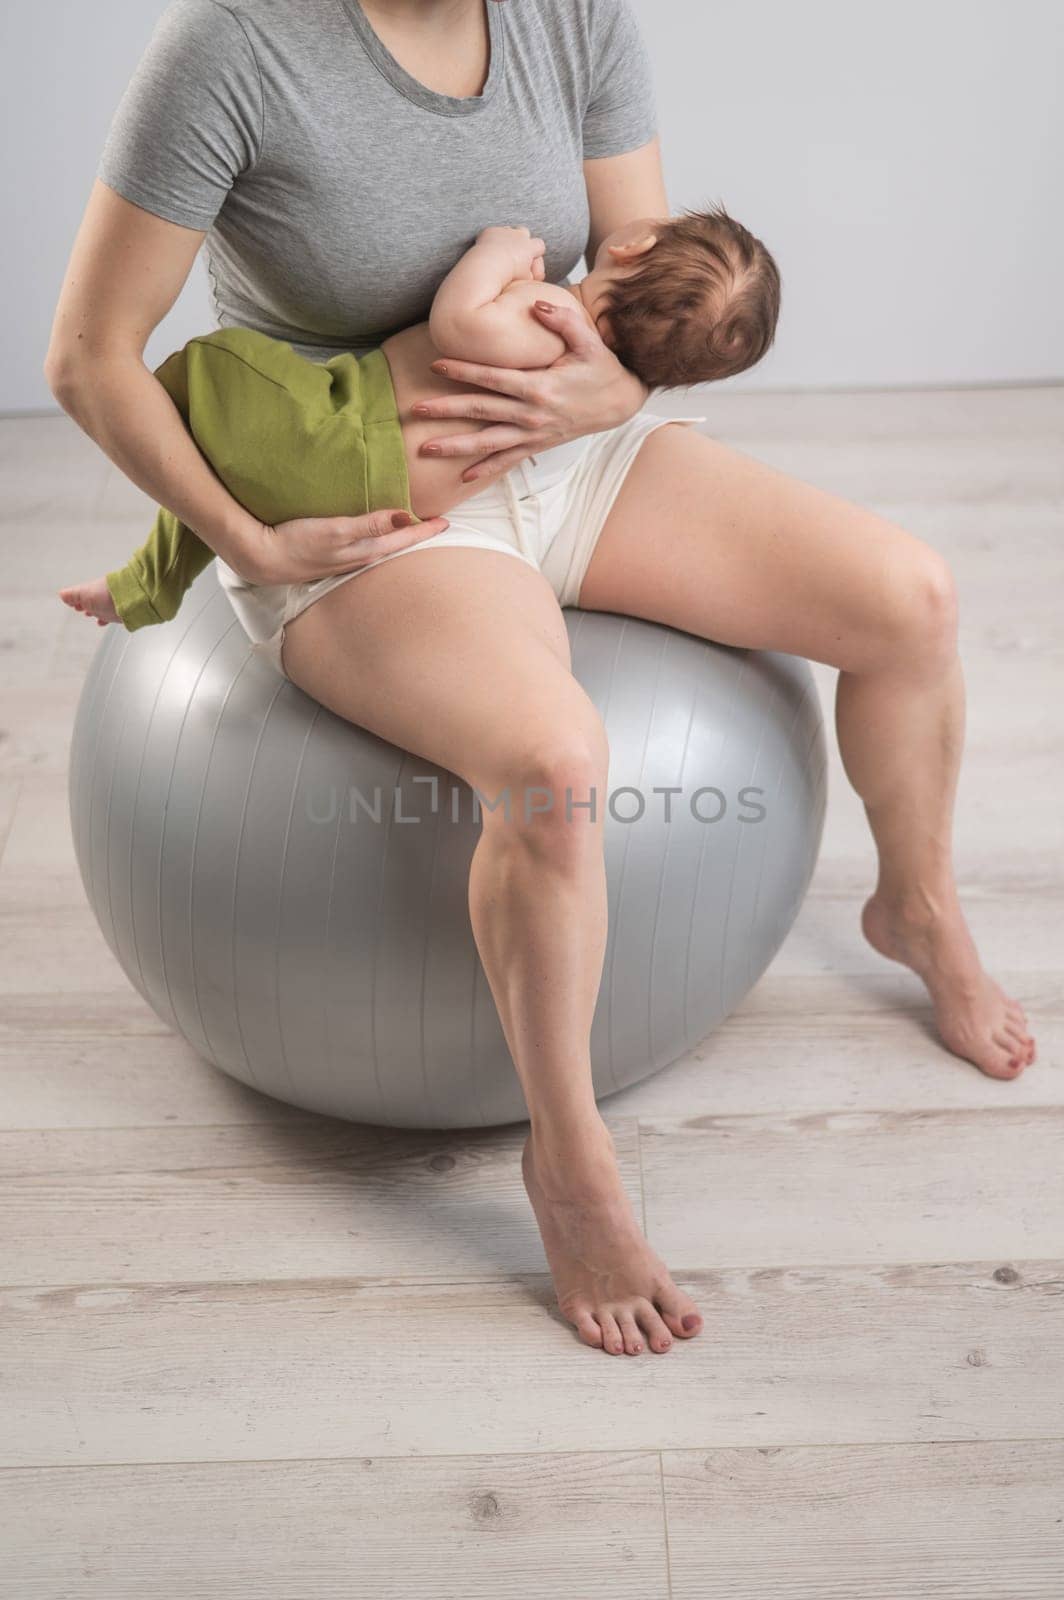 A faceless woman rocks her newborn son on a fitball. Vertical photo